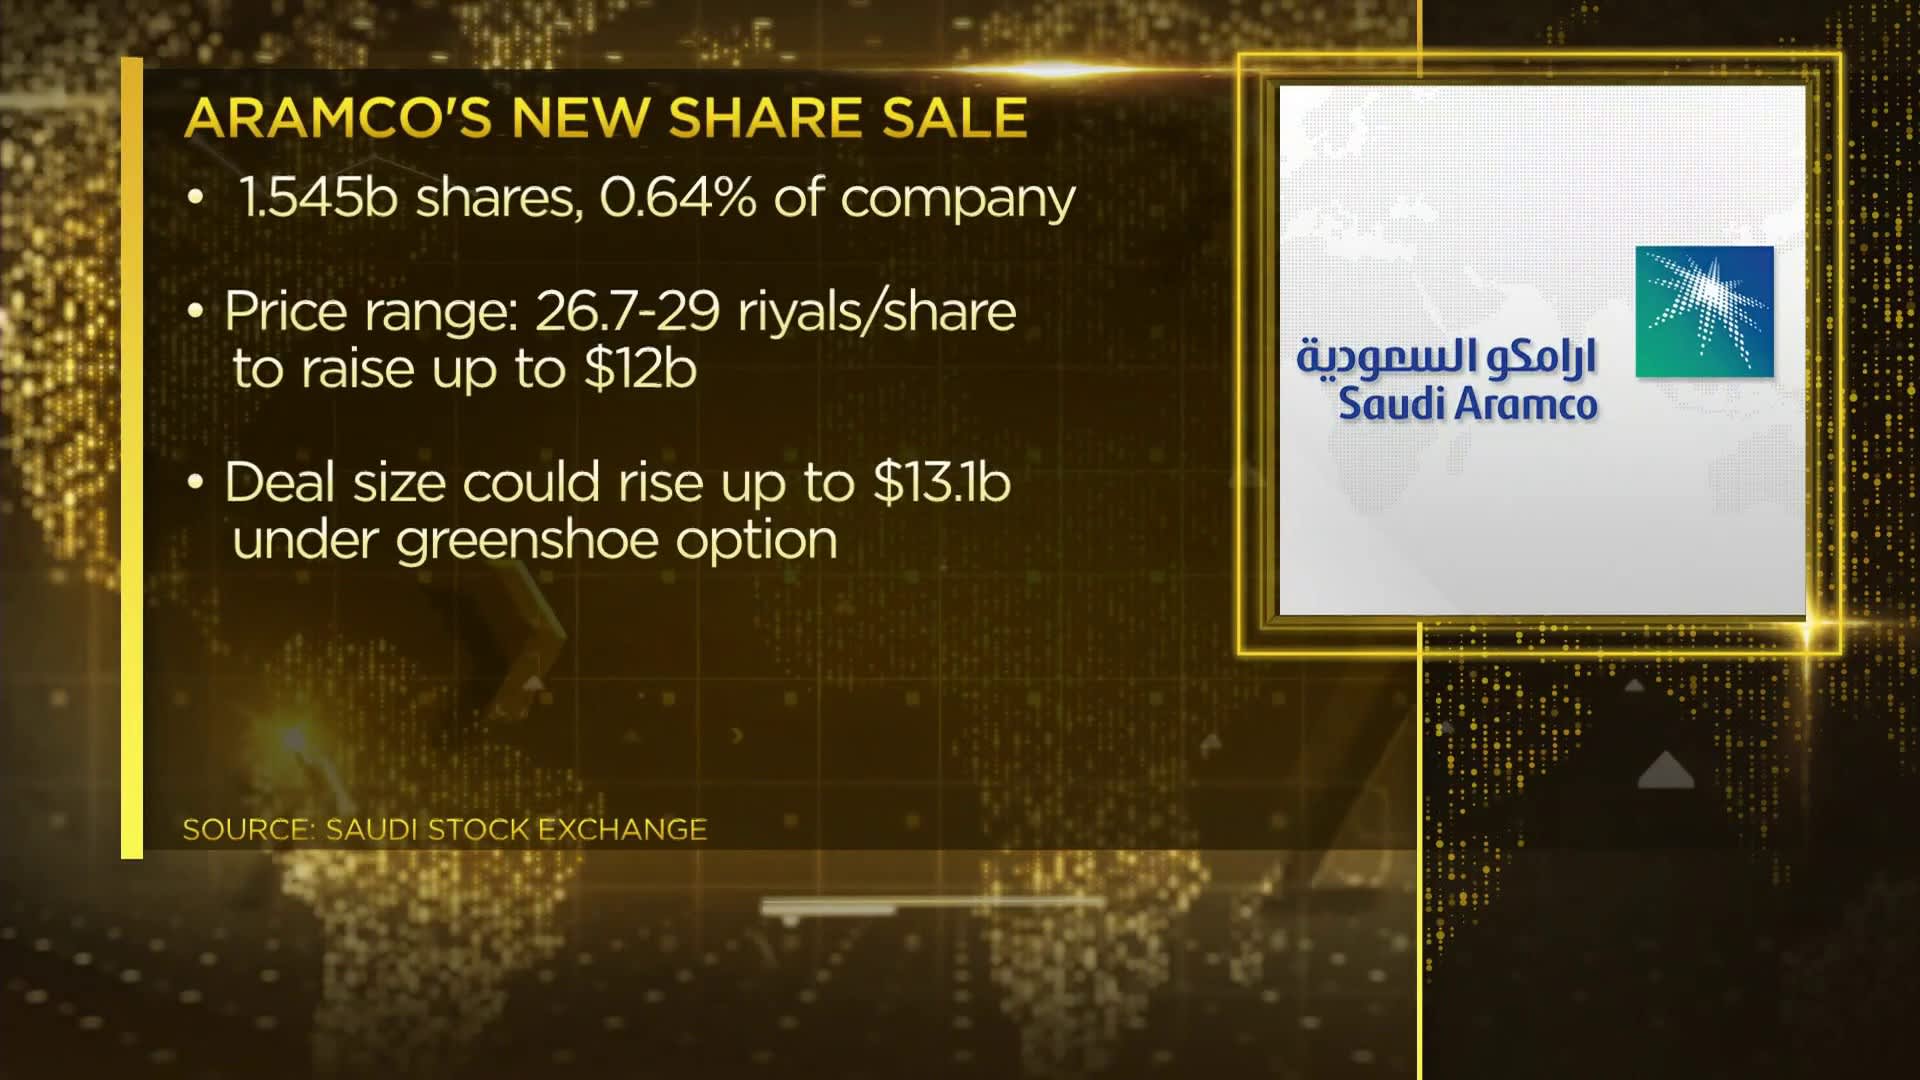 Saudi Arabia to sell $12 billion in Saudi Aramco shares